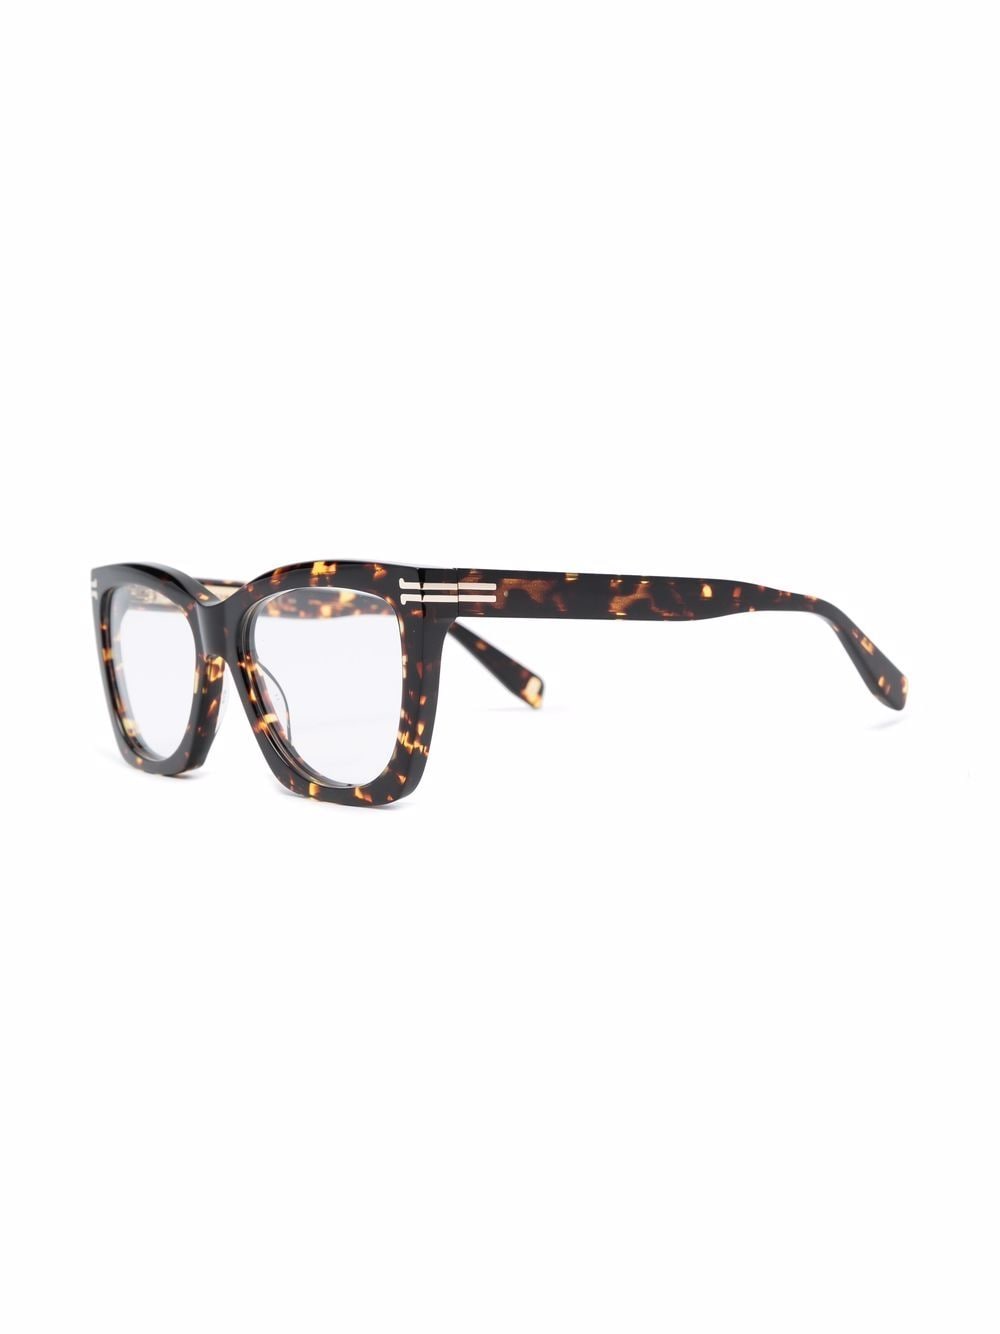 Image 2 of Marc Jacobs Eyewear tortoiseshell-effect cat-eye frame glasses